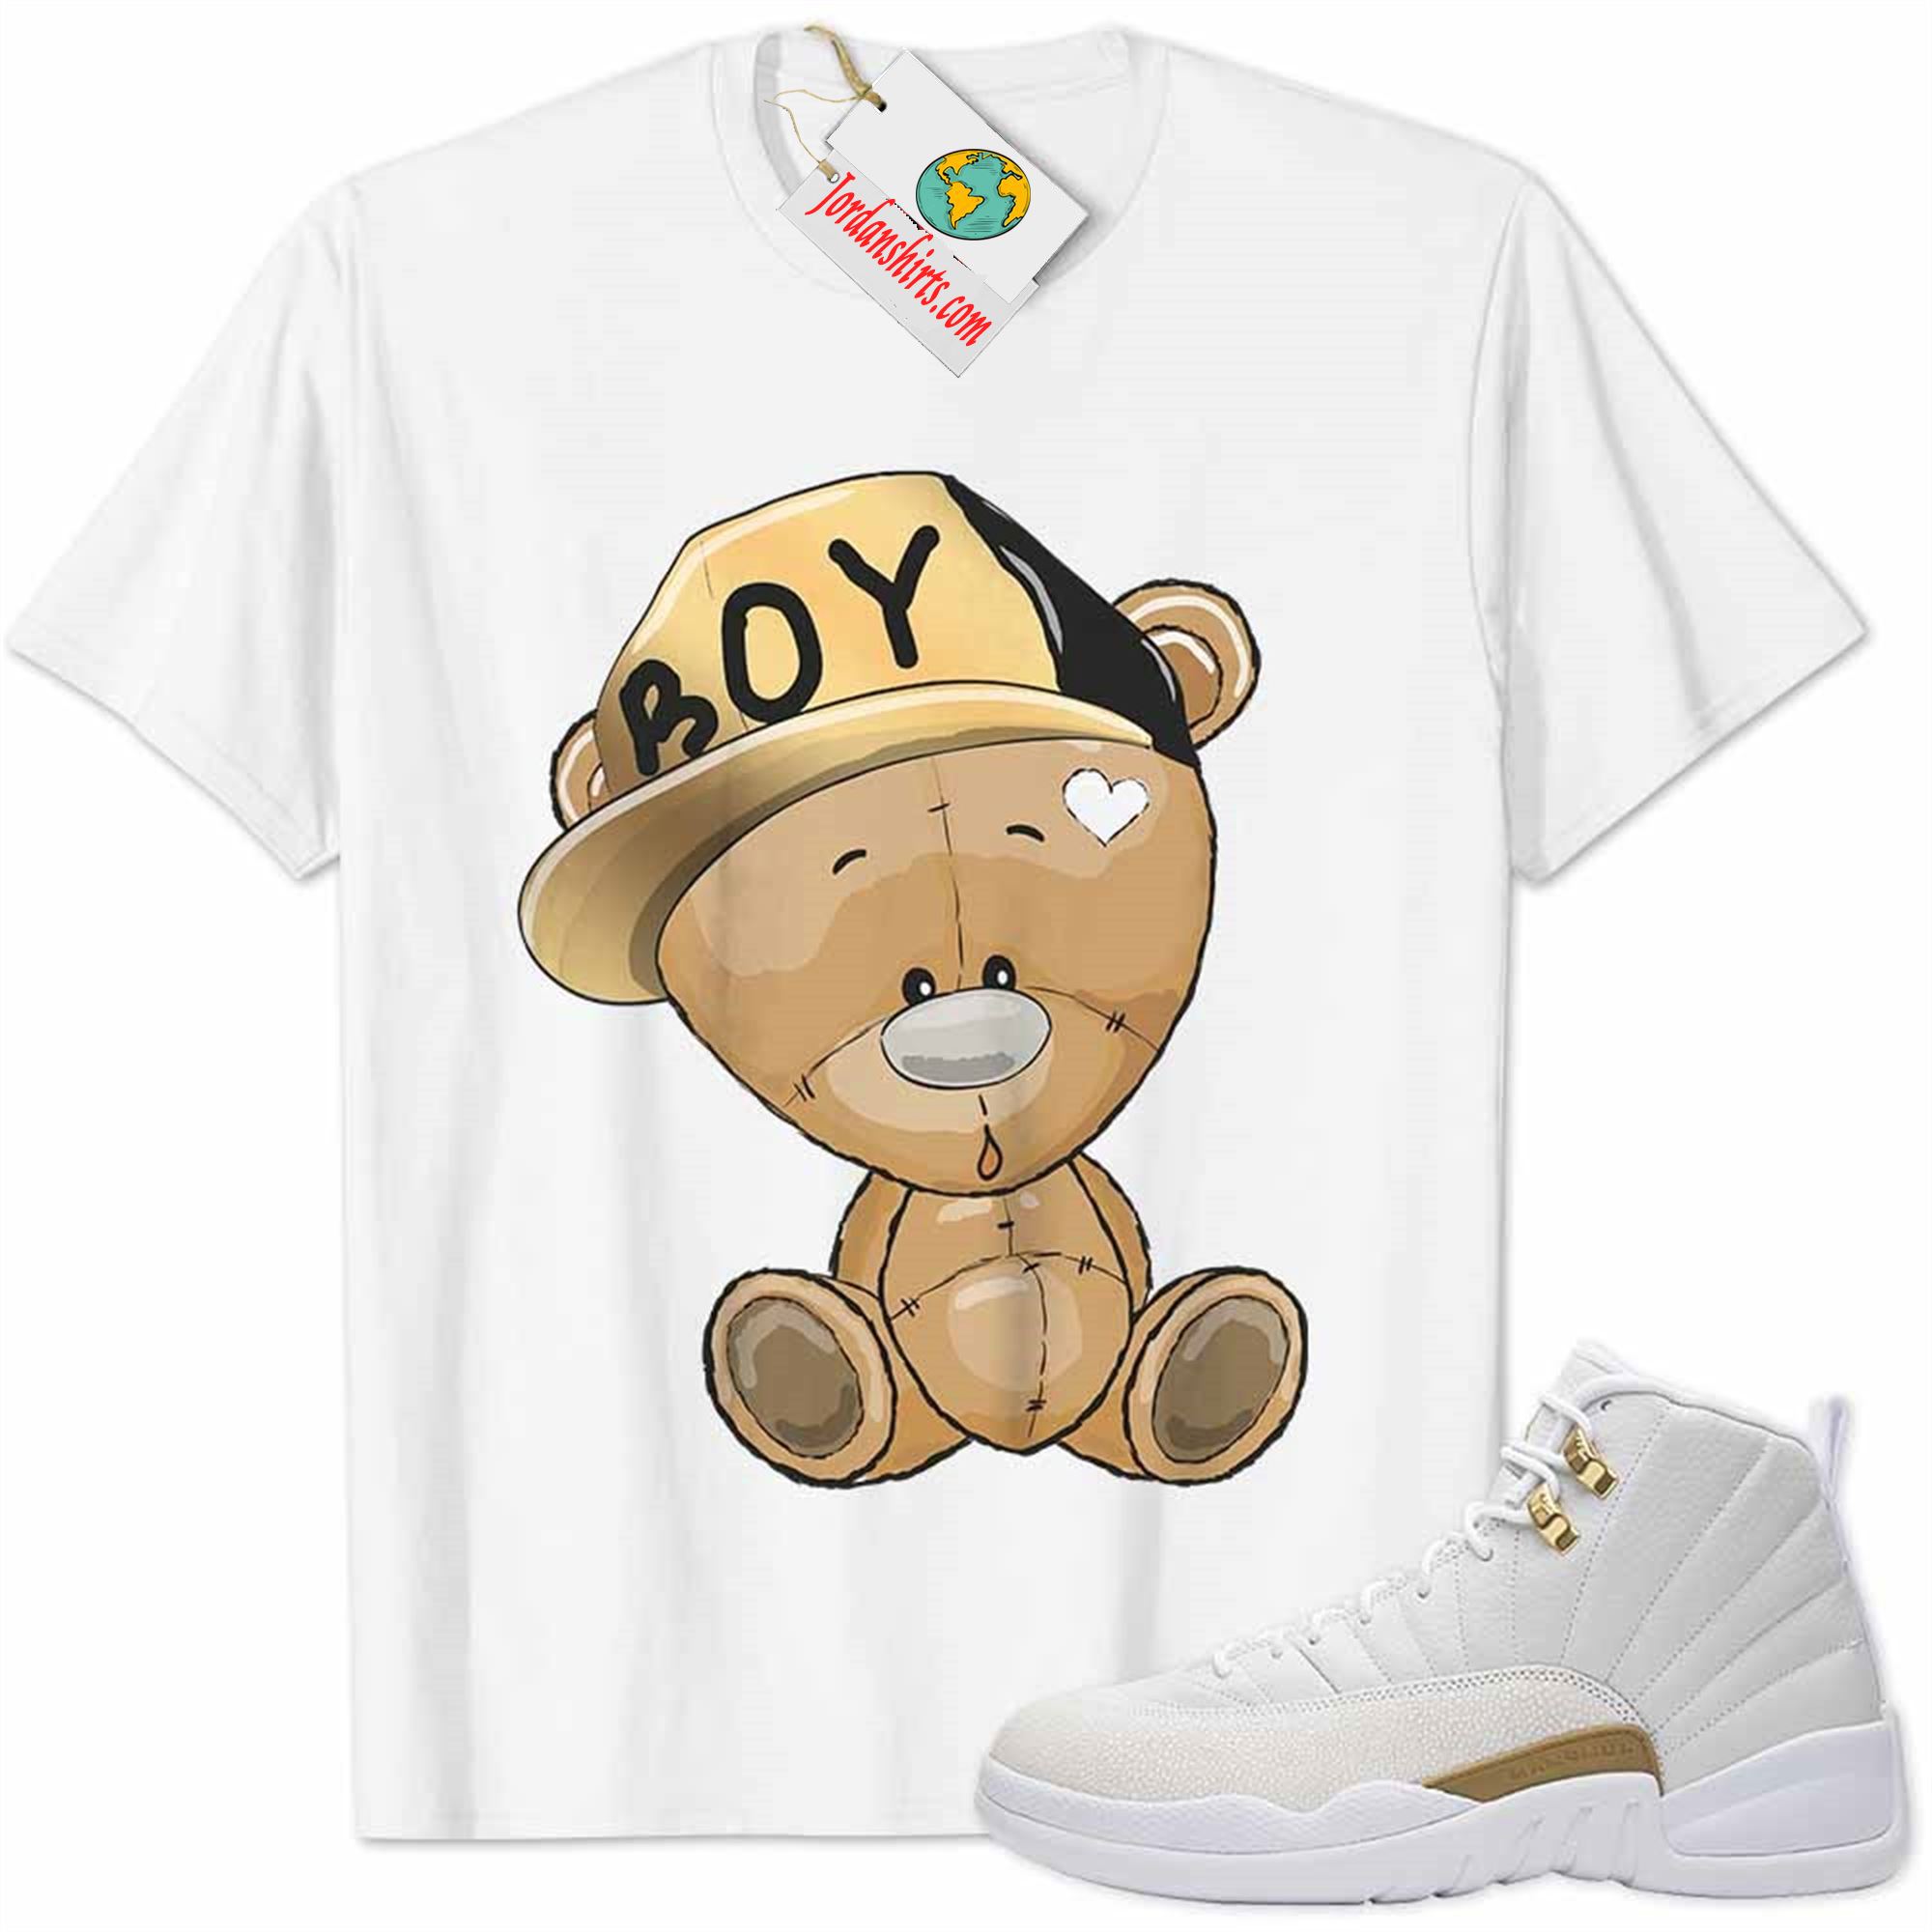 Jordan 12 Shirt, Jordan 12 Ovo Shirt Cute Baby Teddy Bear White Full Size Up To 5xl